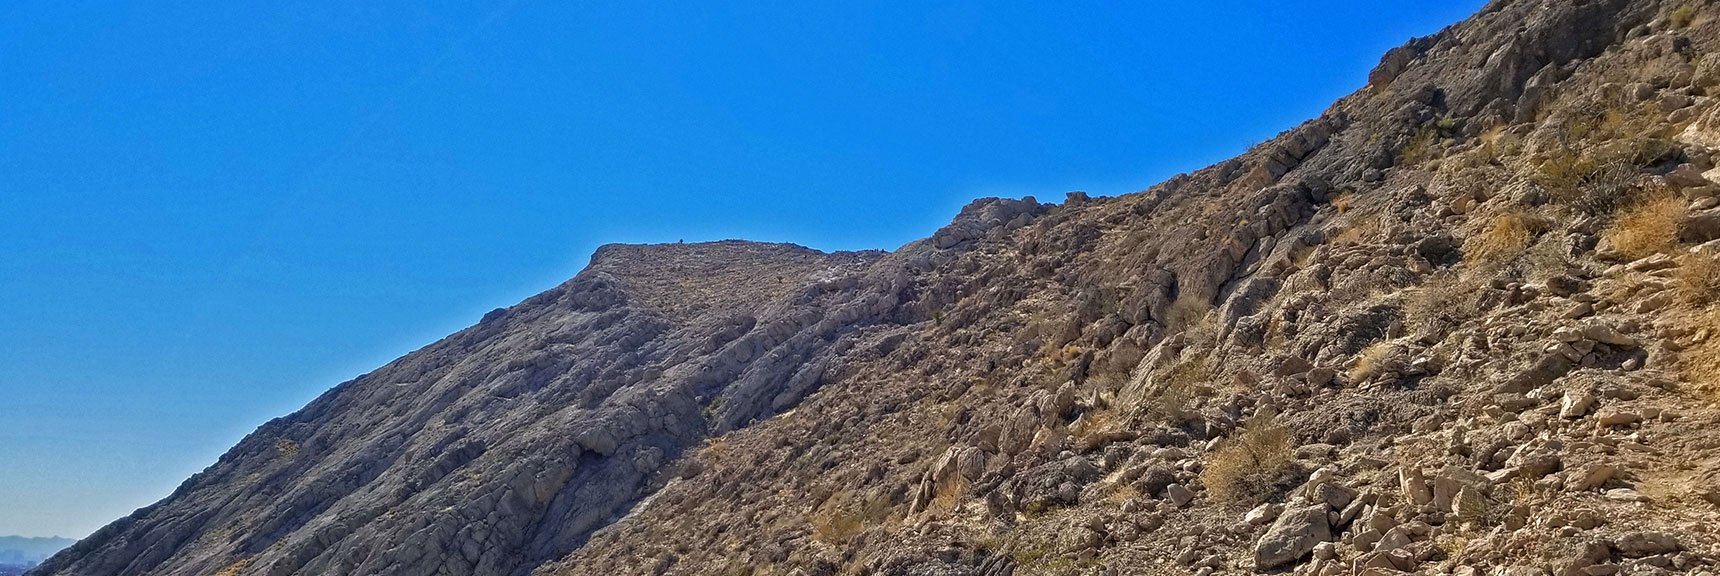 Higher View of Main Summit Approach Ridge | Lone Mountain | Las Vegas, Nevada